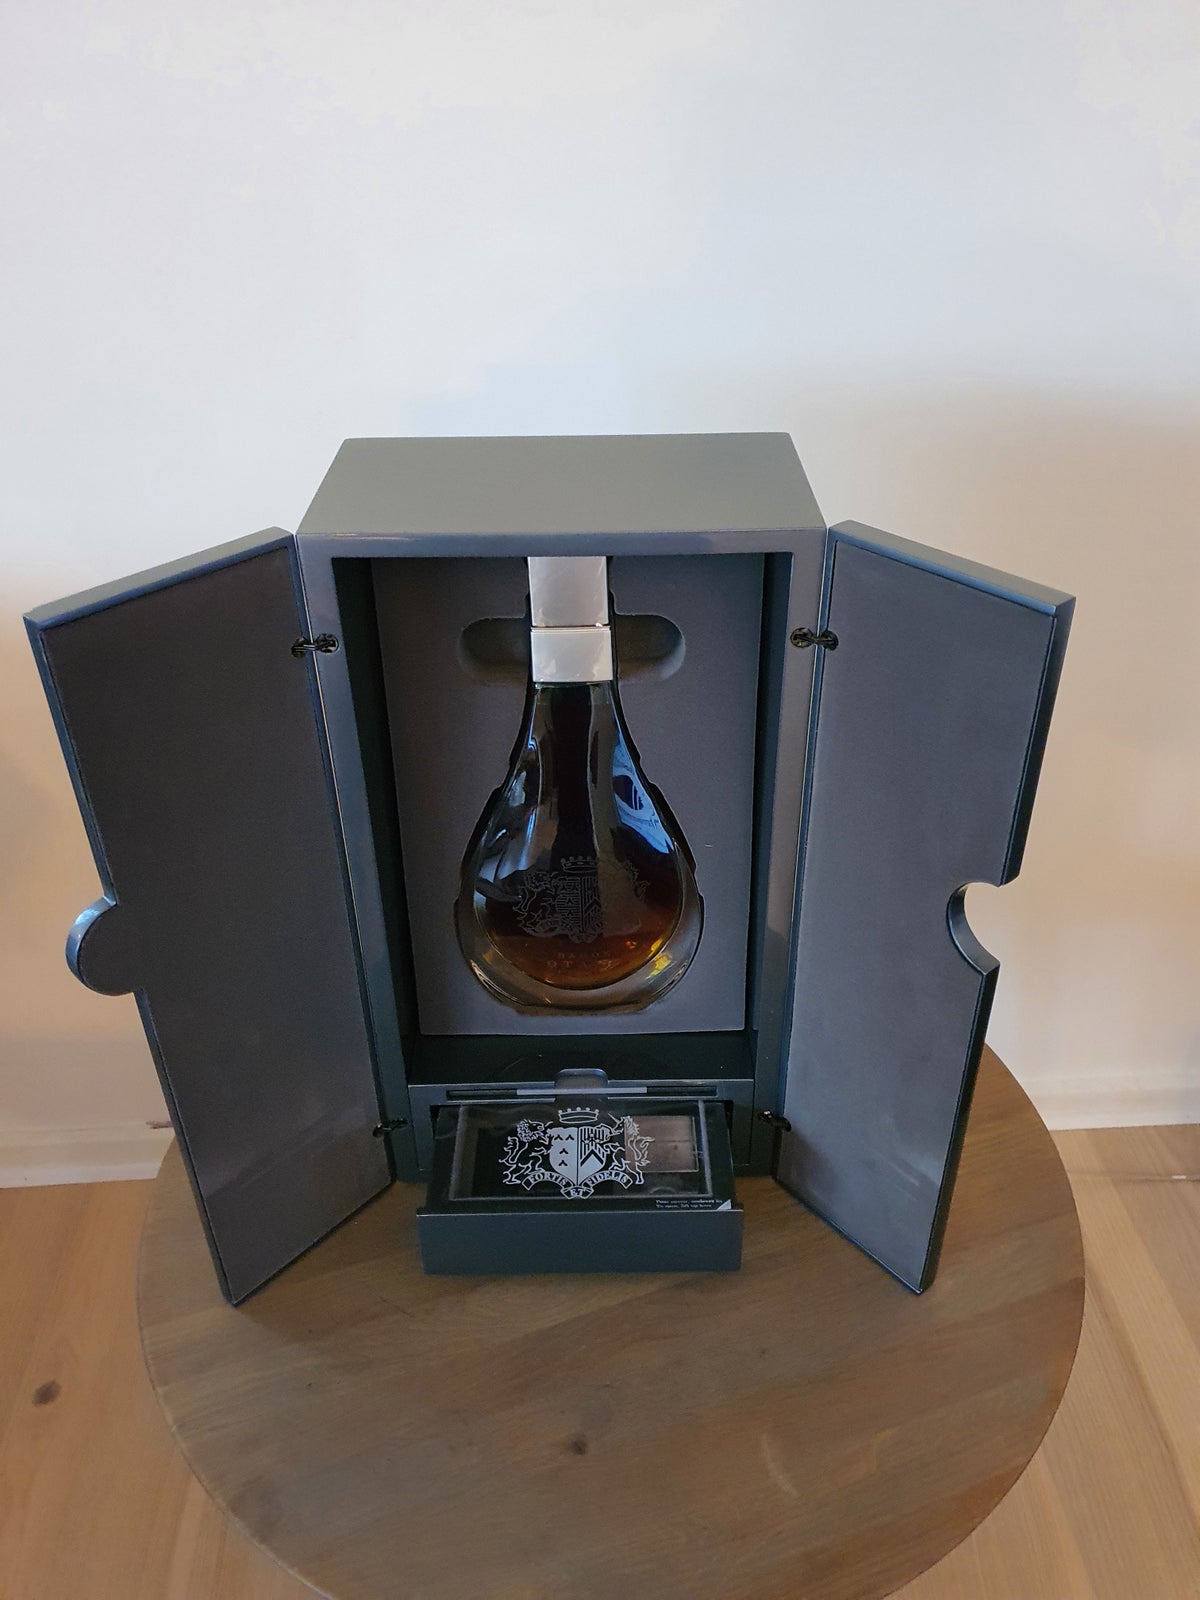 Cognac Baron Otard 'fortis et fidelis'